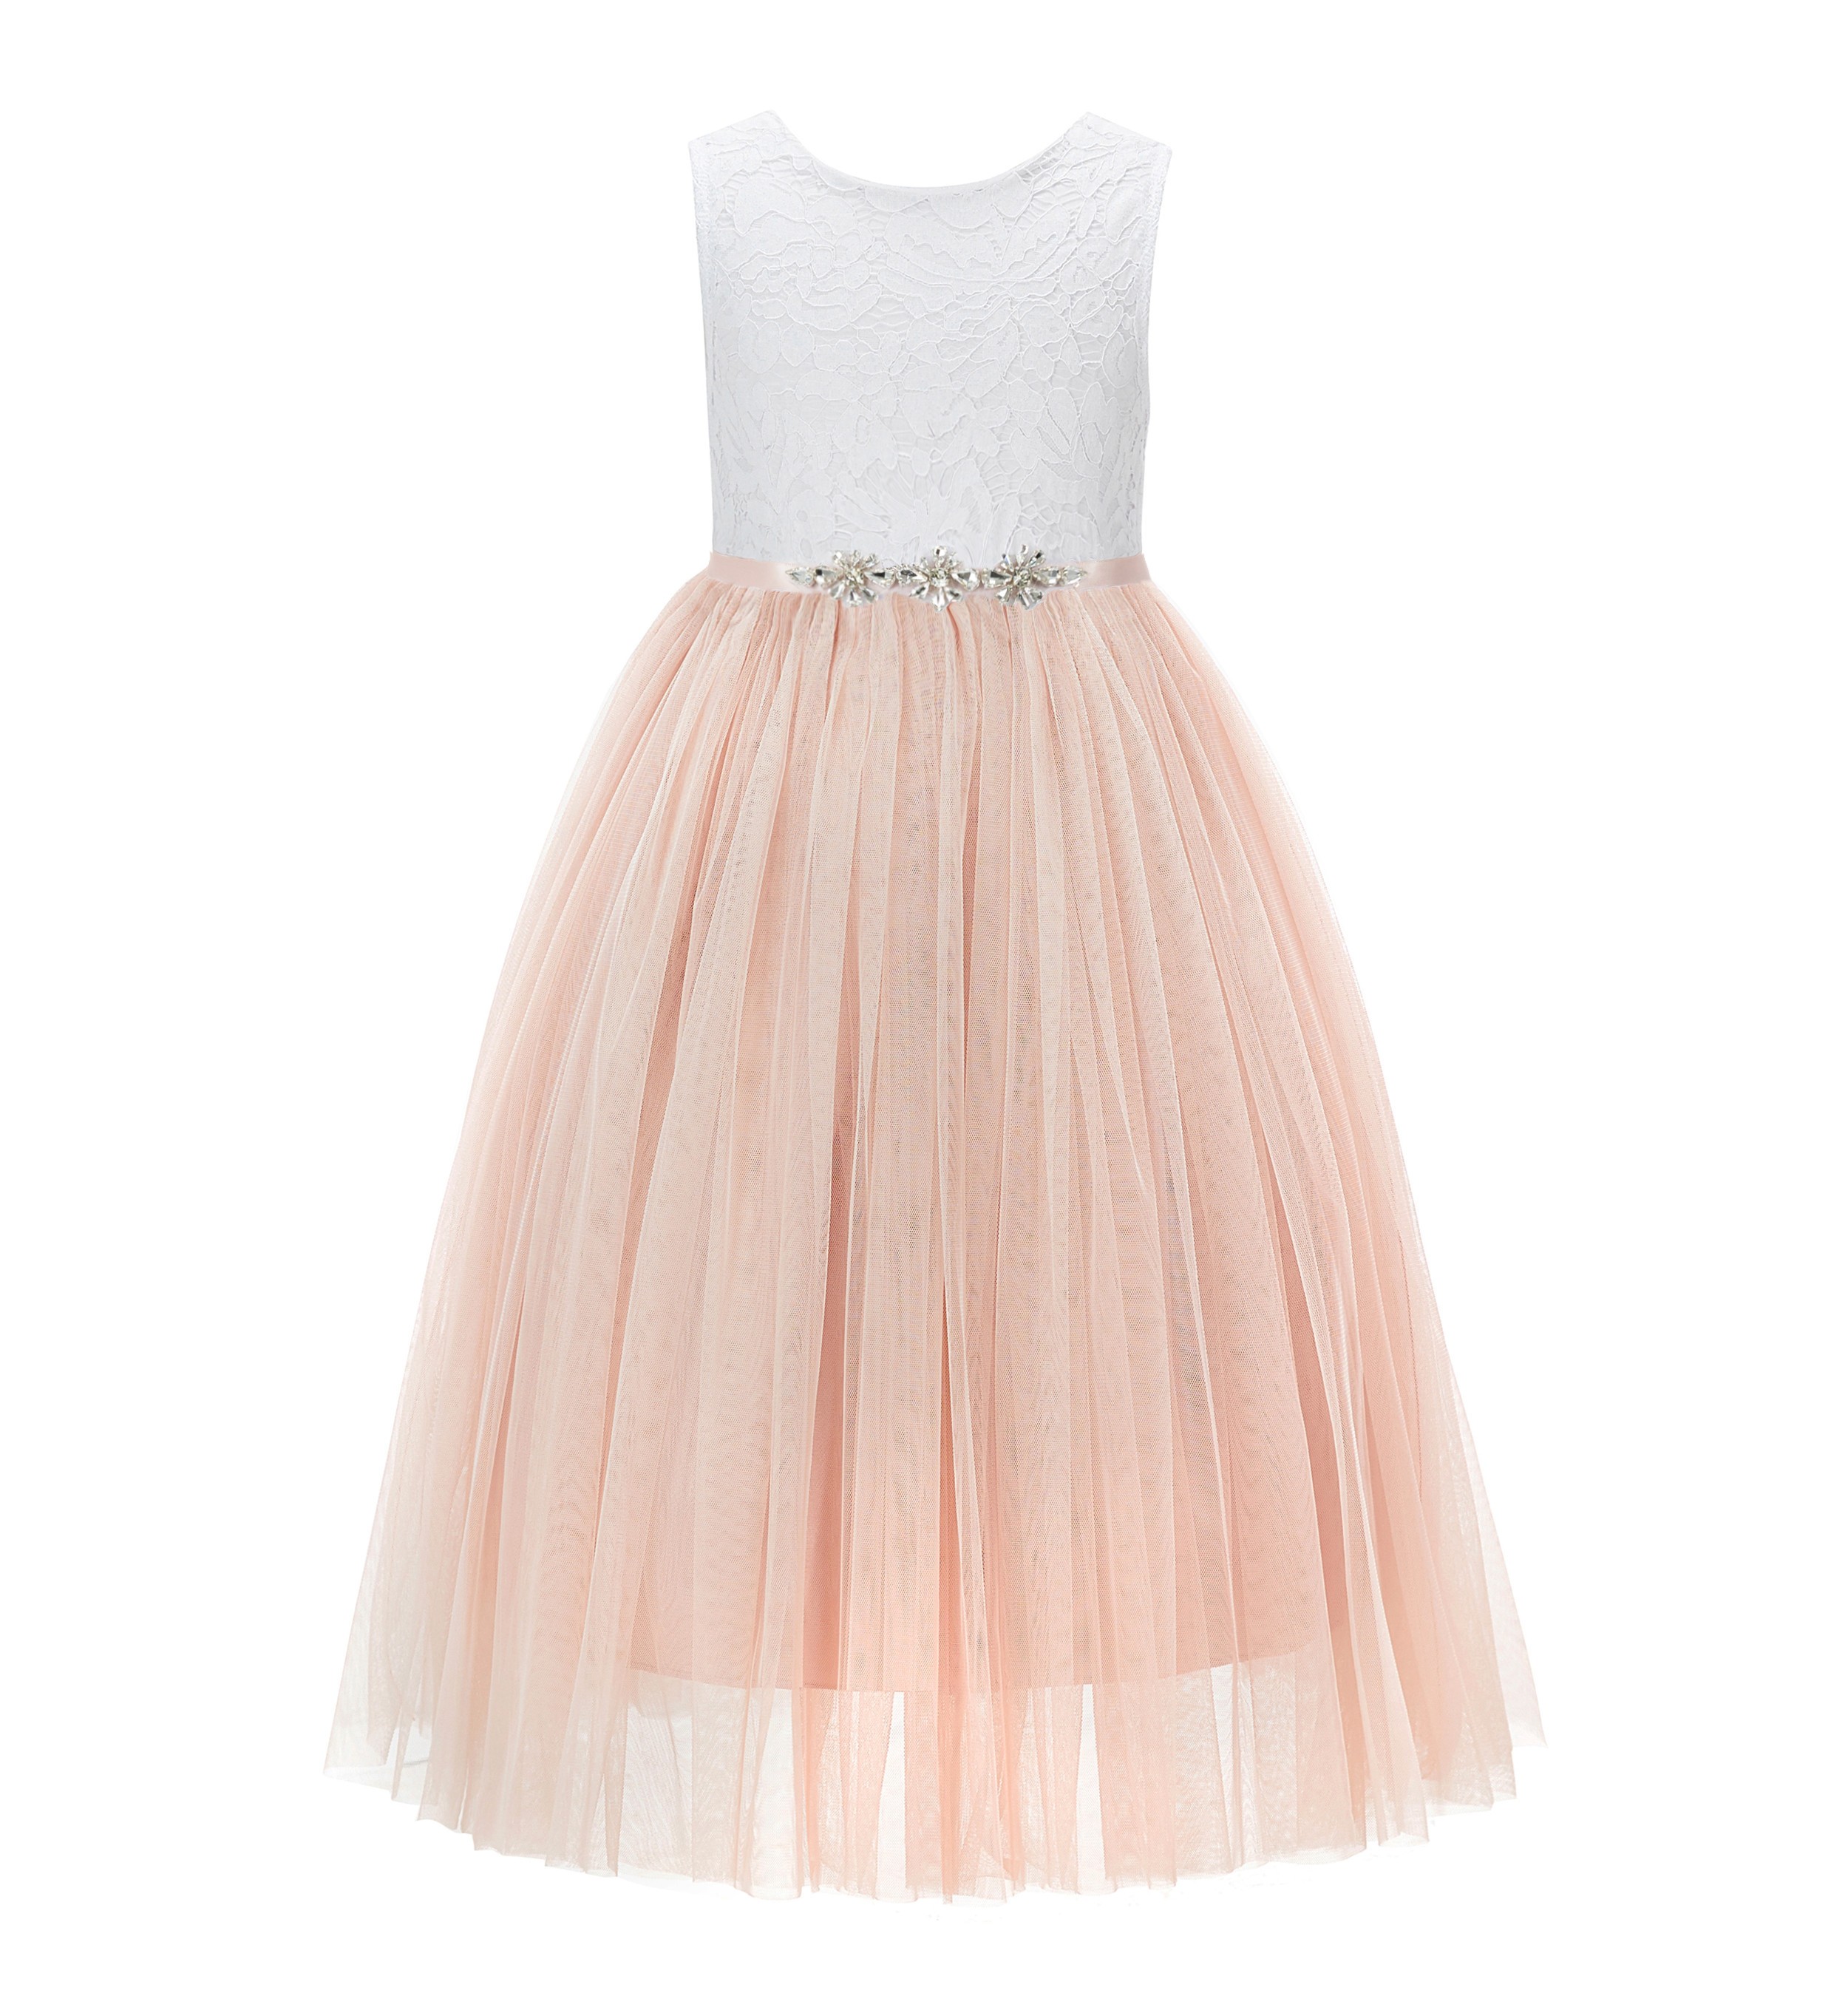 Blush Pink Scalloped V-Back Lace A-Line Flower Girl Dress 207R4